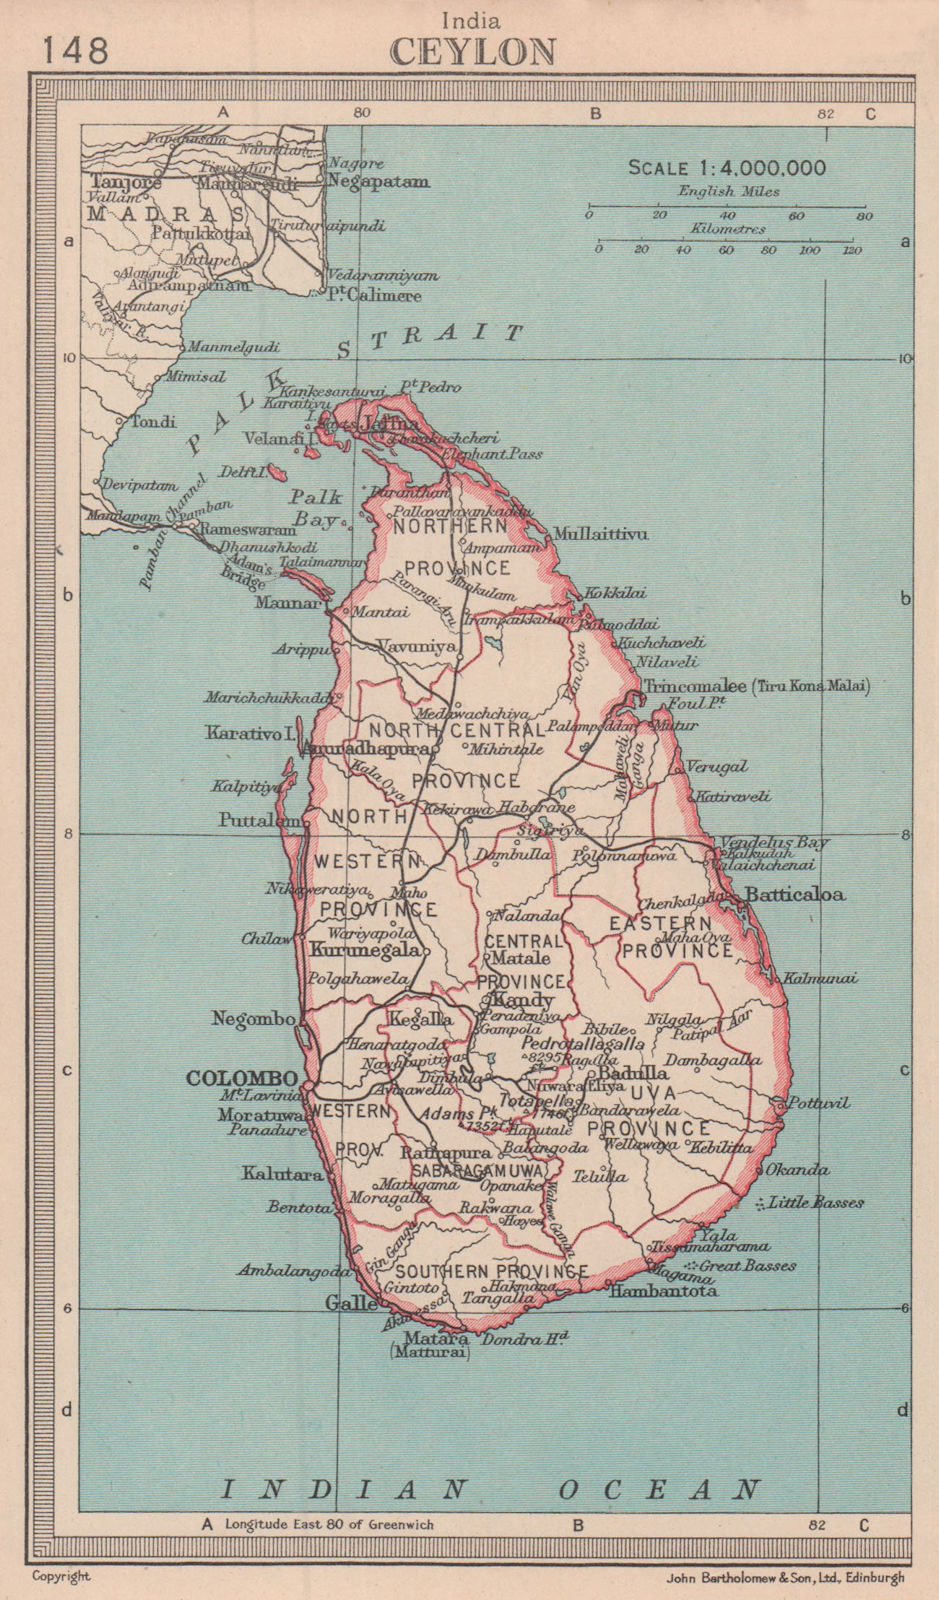 Sri Lanka. Ceylon. BARTHOLOMEW 1949 old vintage map plan chart